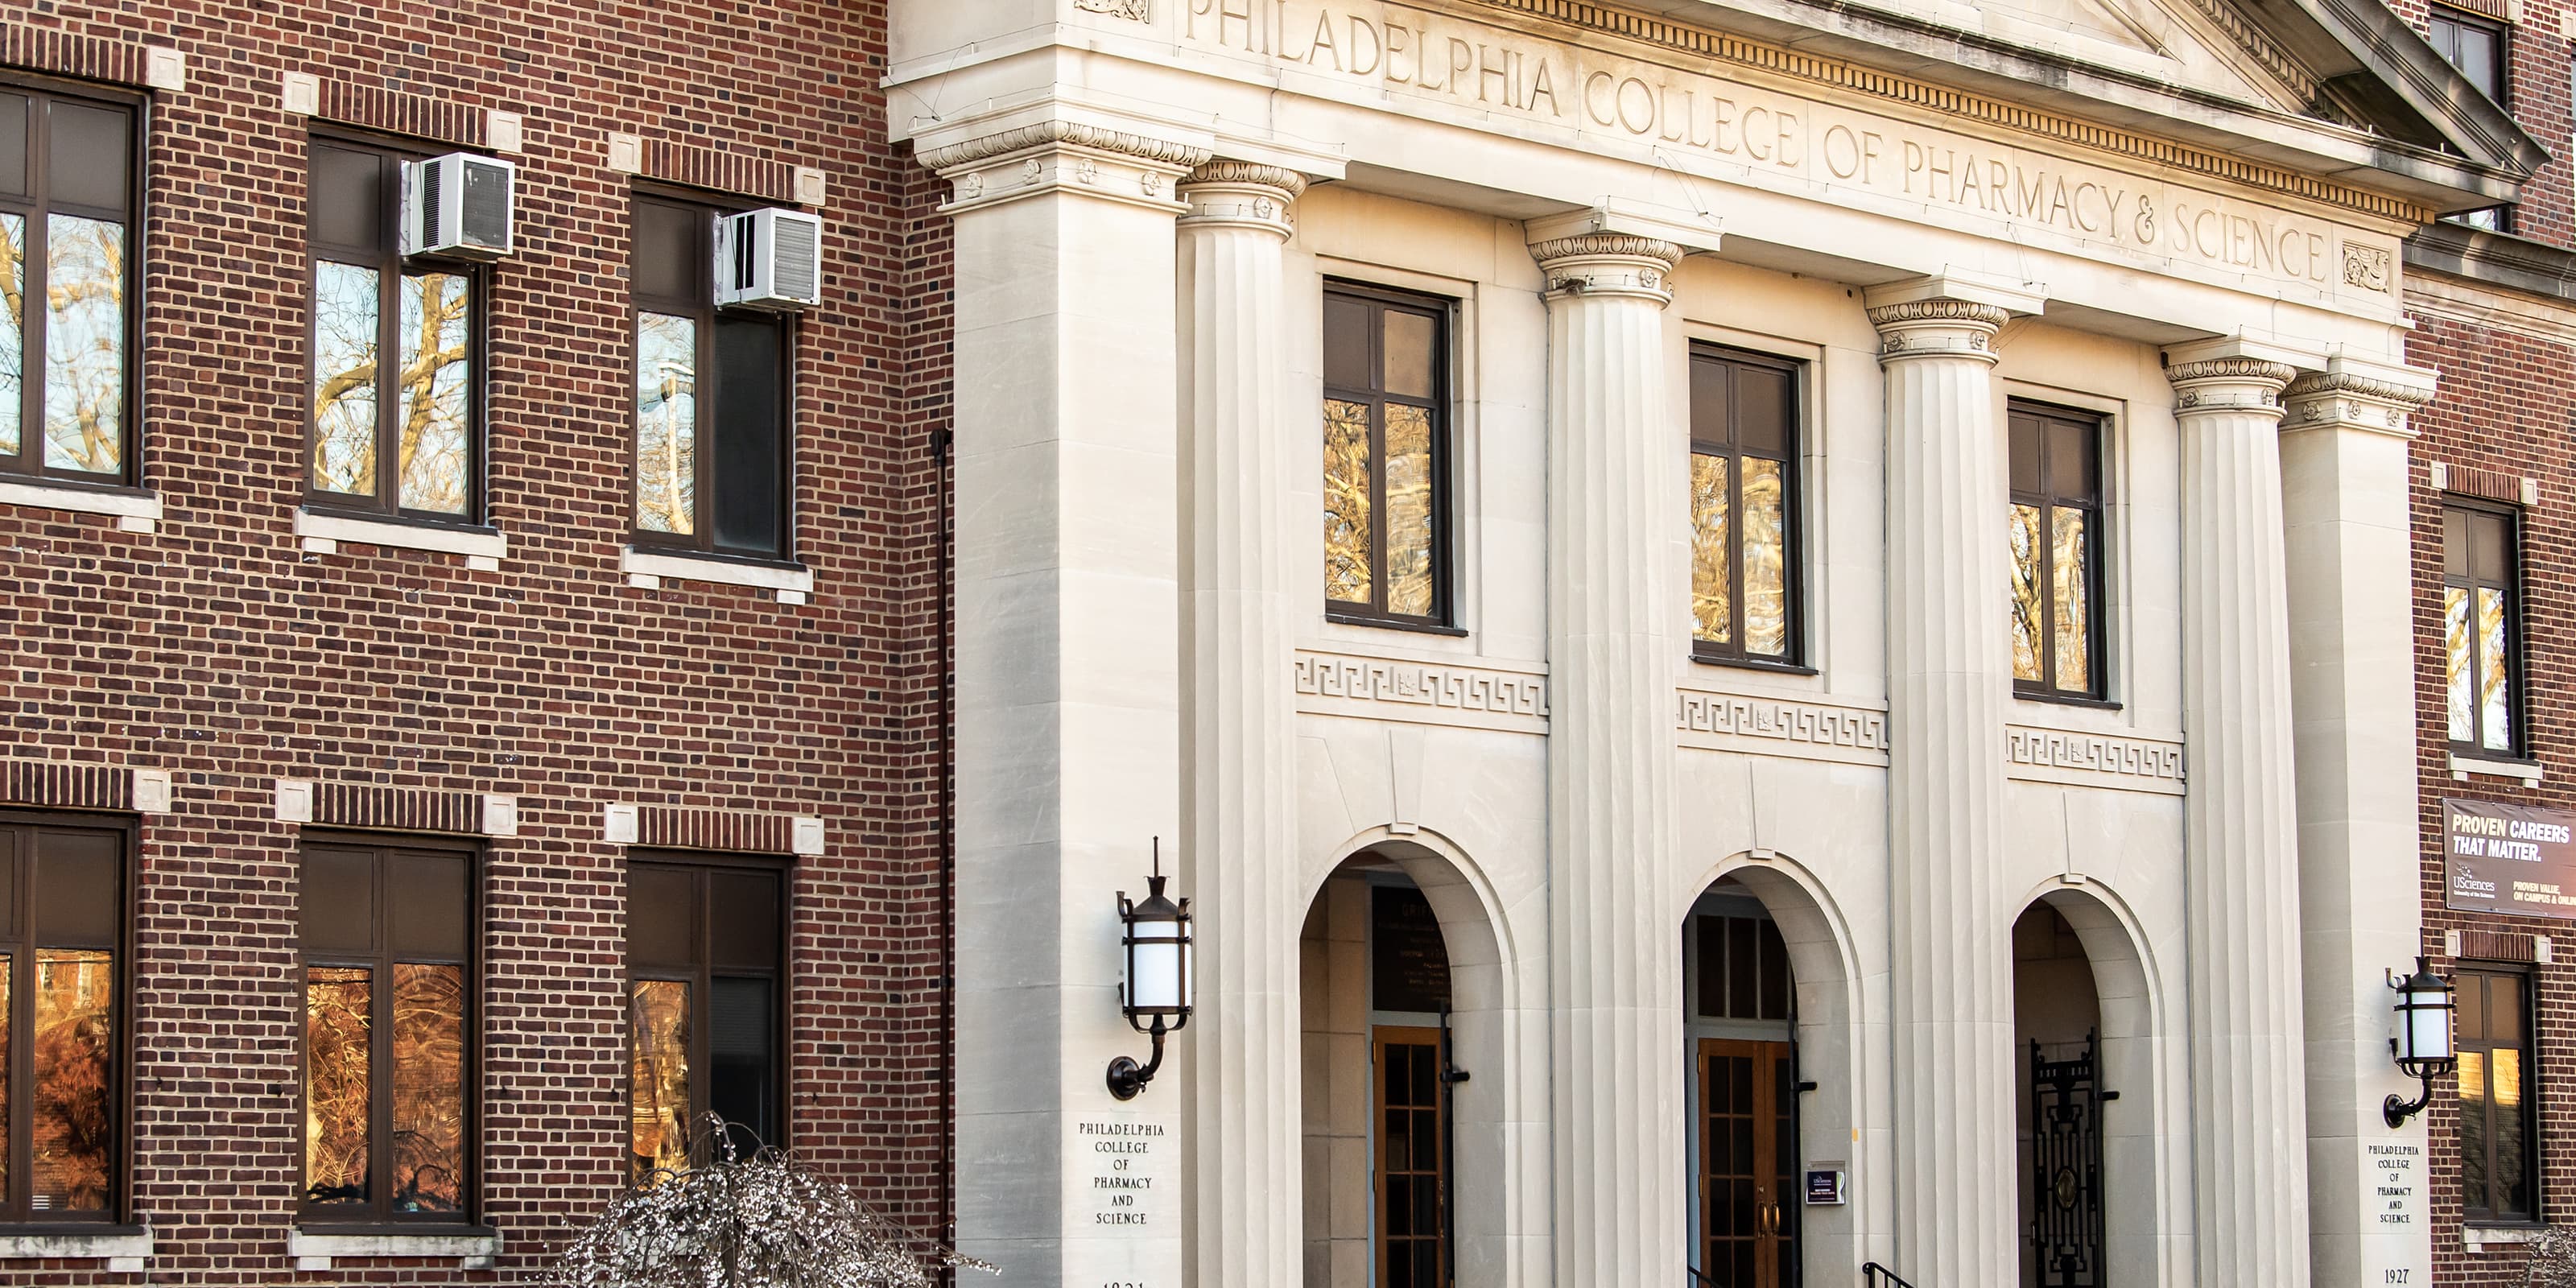 Philadelphia College of Pharmacy at Saint Joseph's University